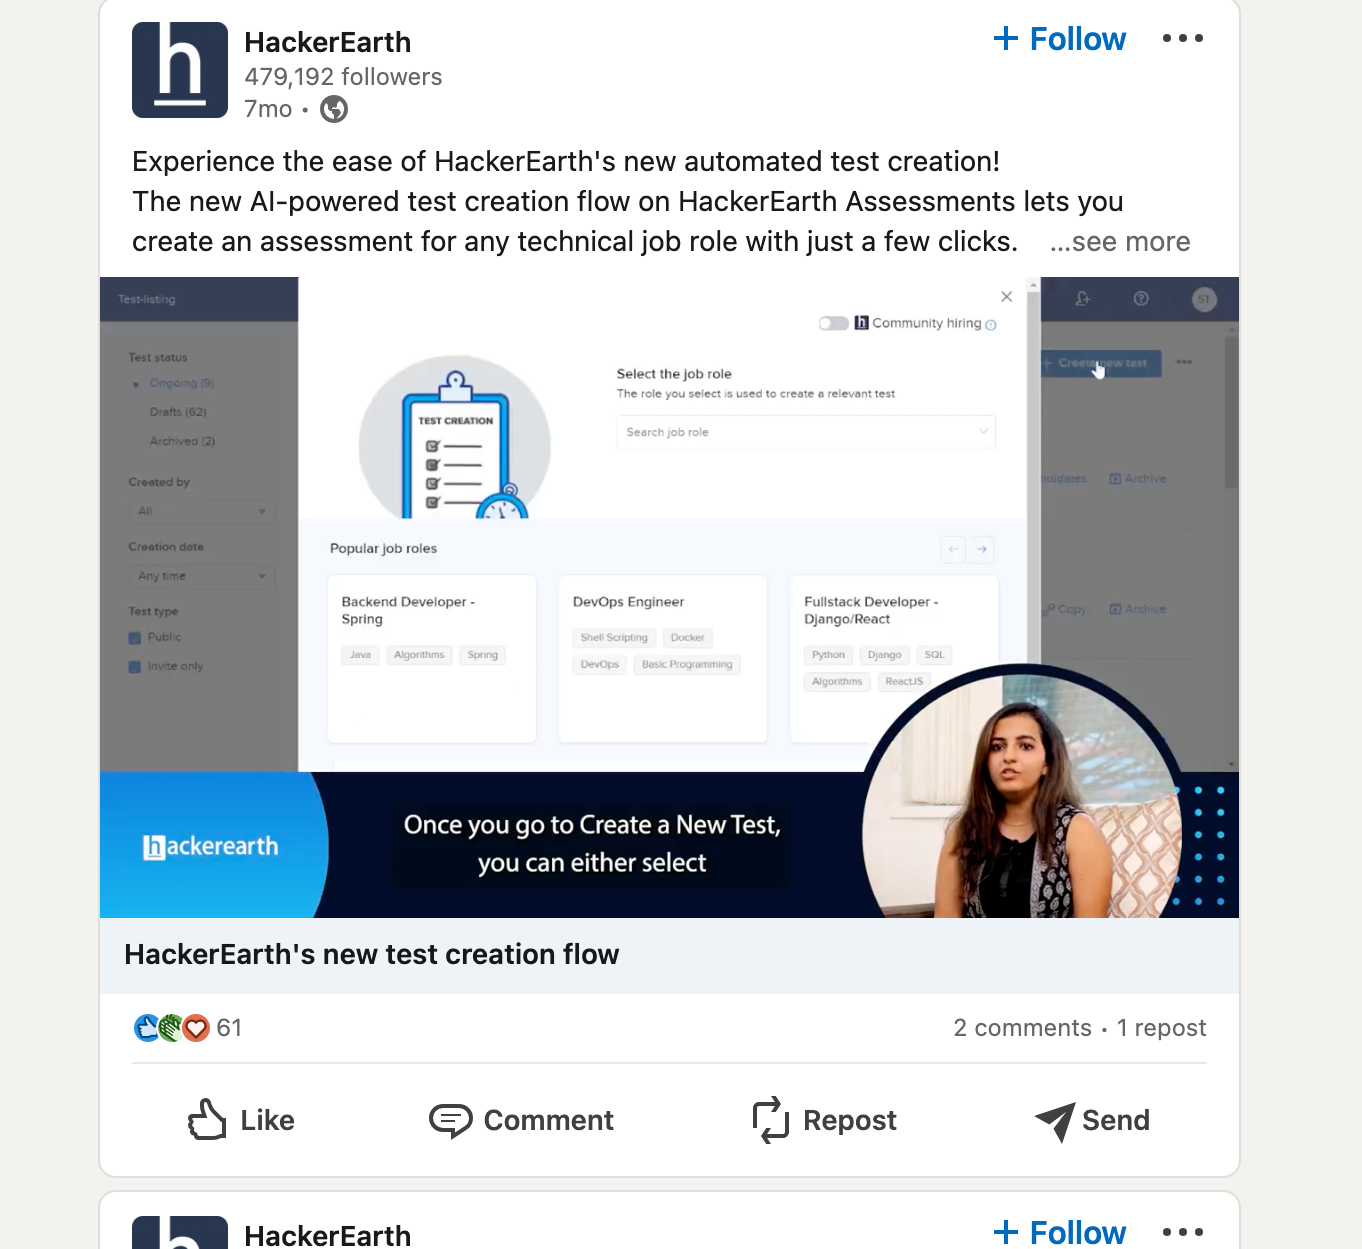 HackerEarth post on Linkedin